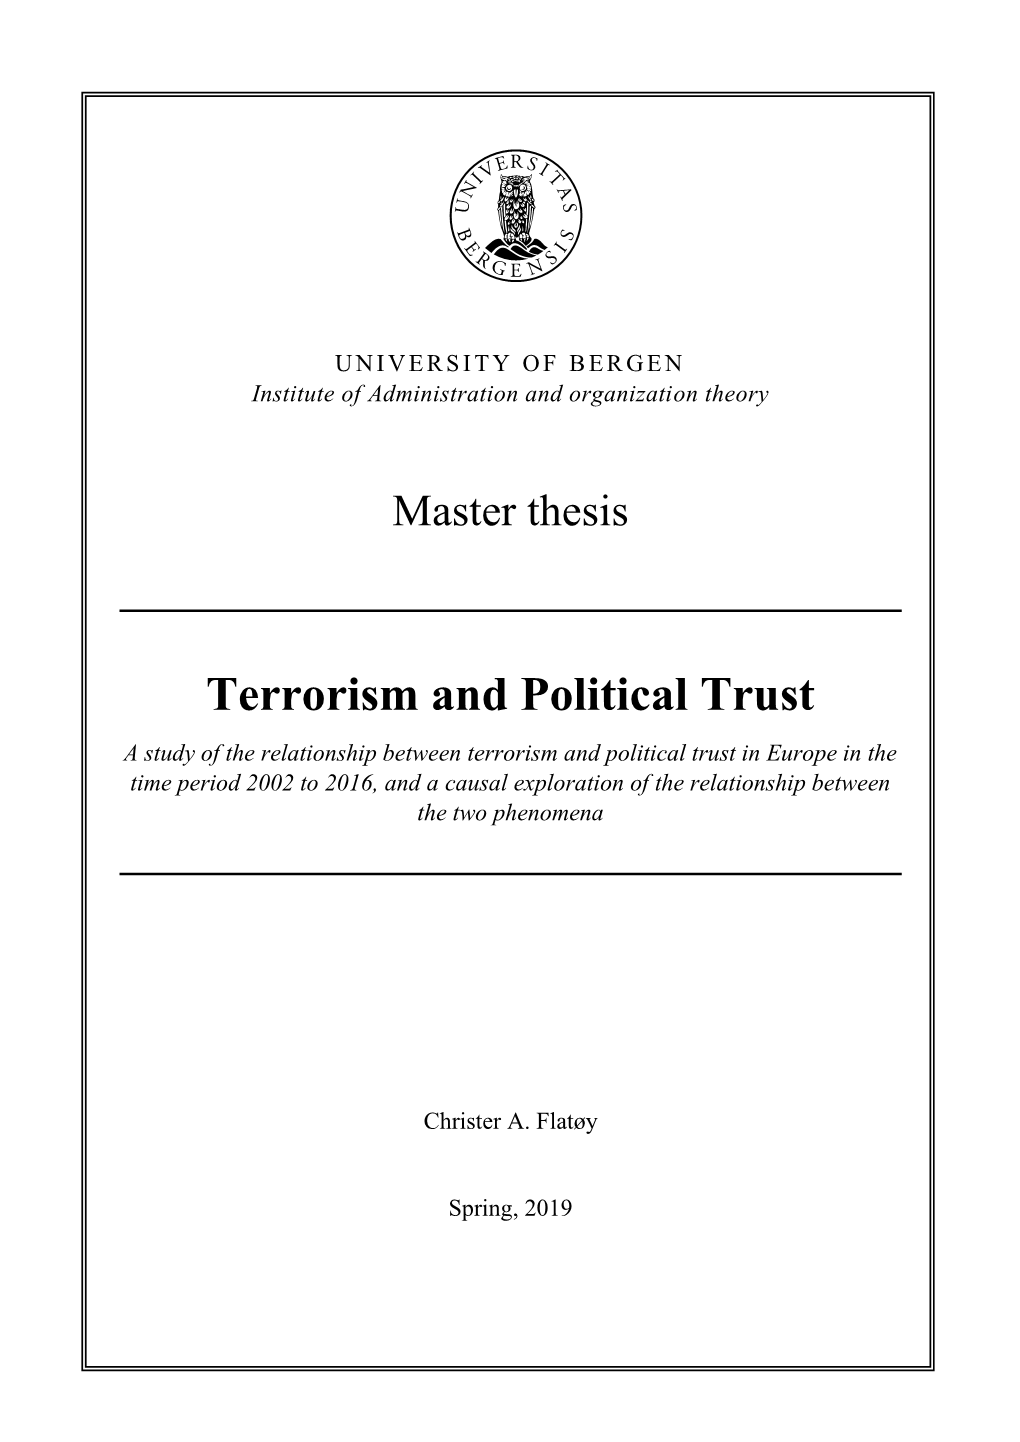 Terrorism and Political Trust